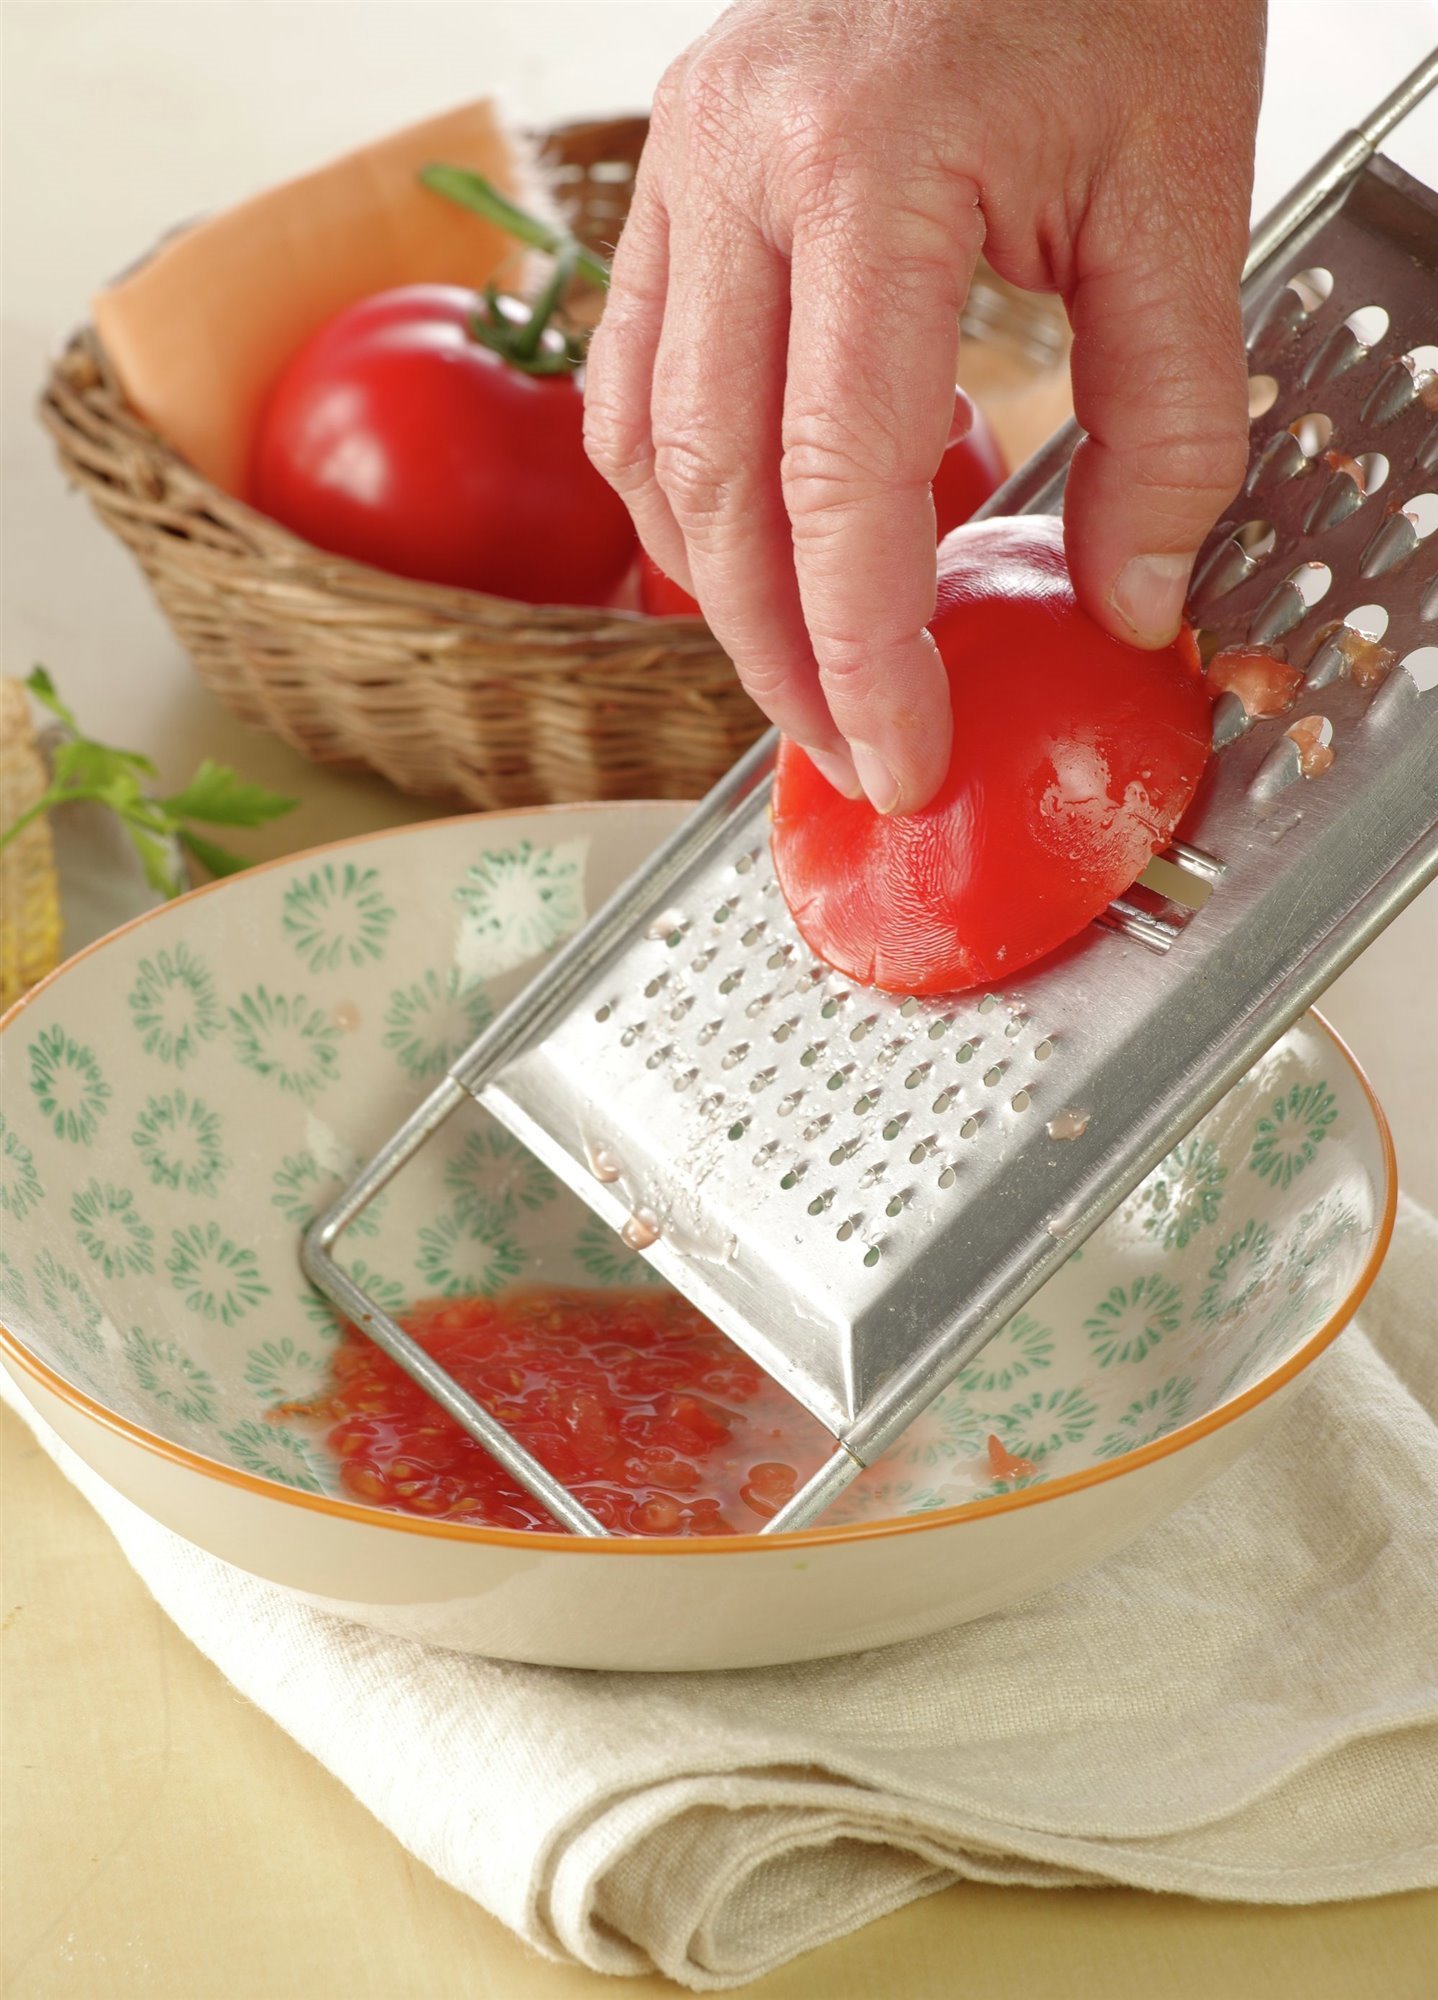 1. Añade tomate ralaldo